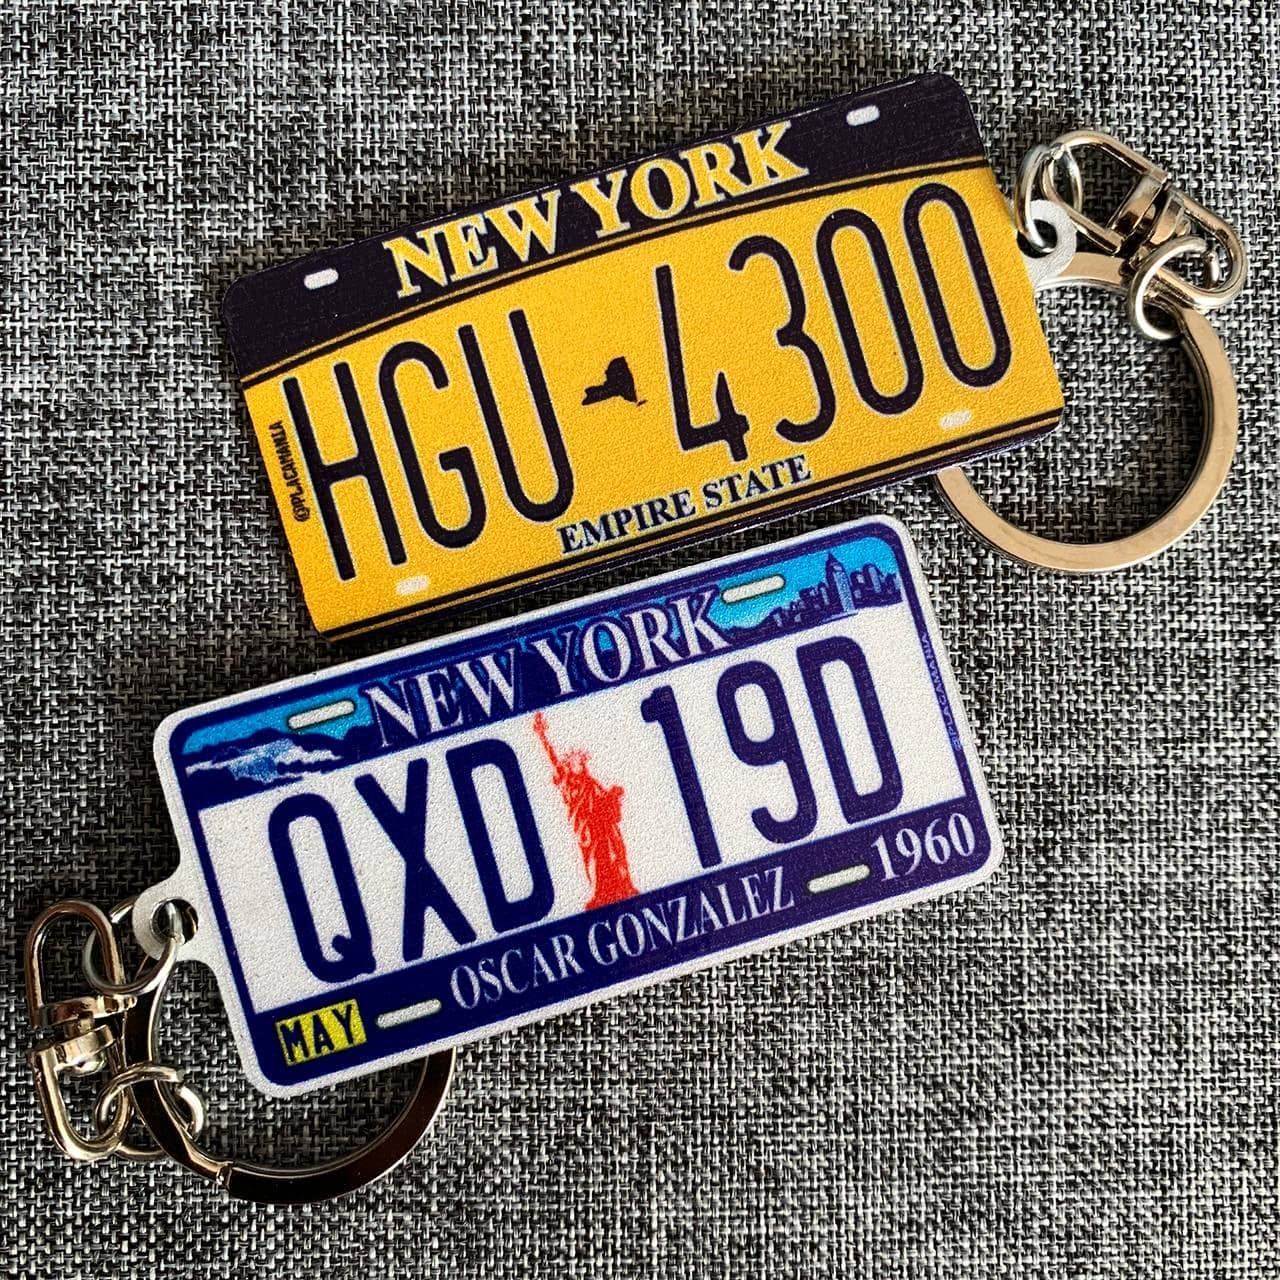 Metal New York License Plate Key Chain